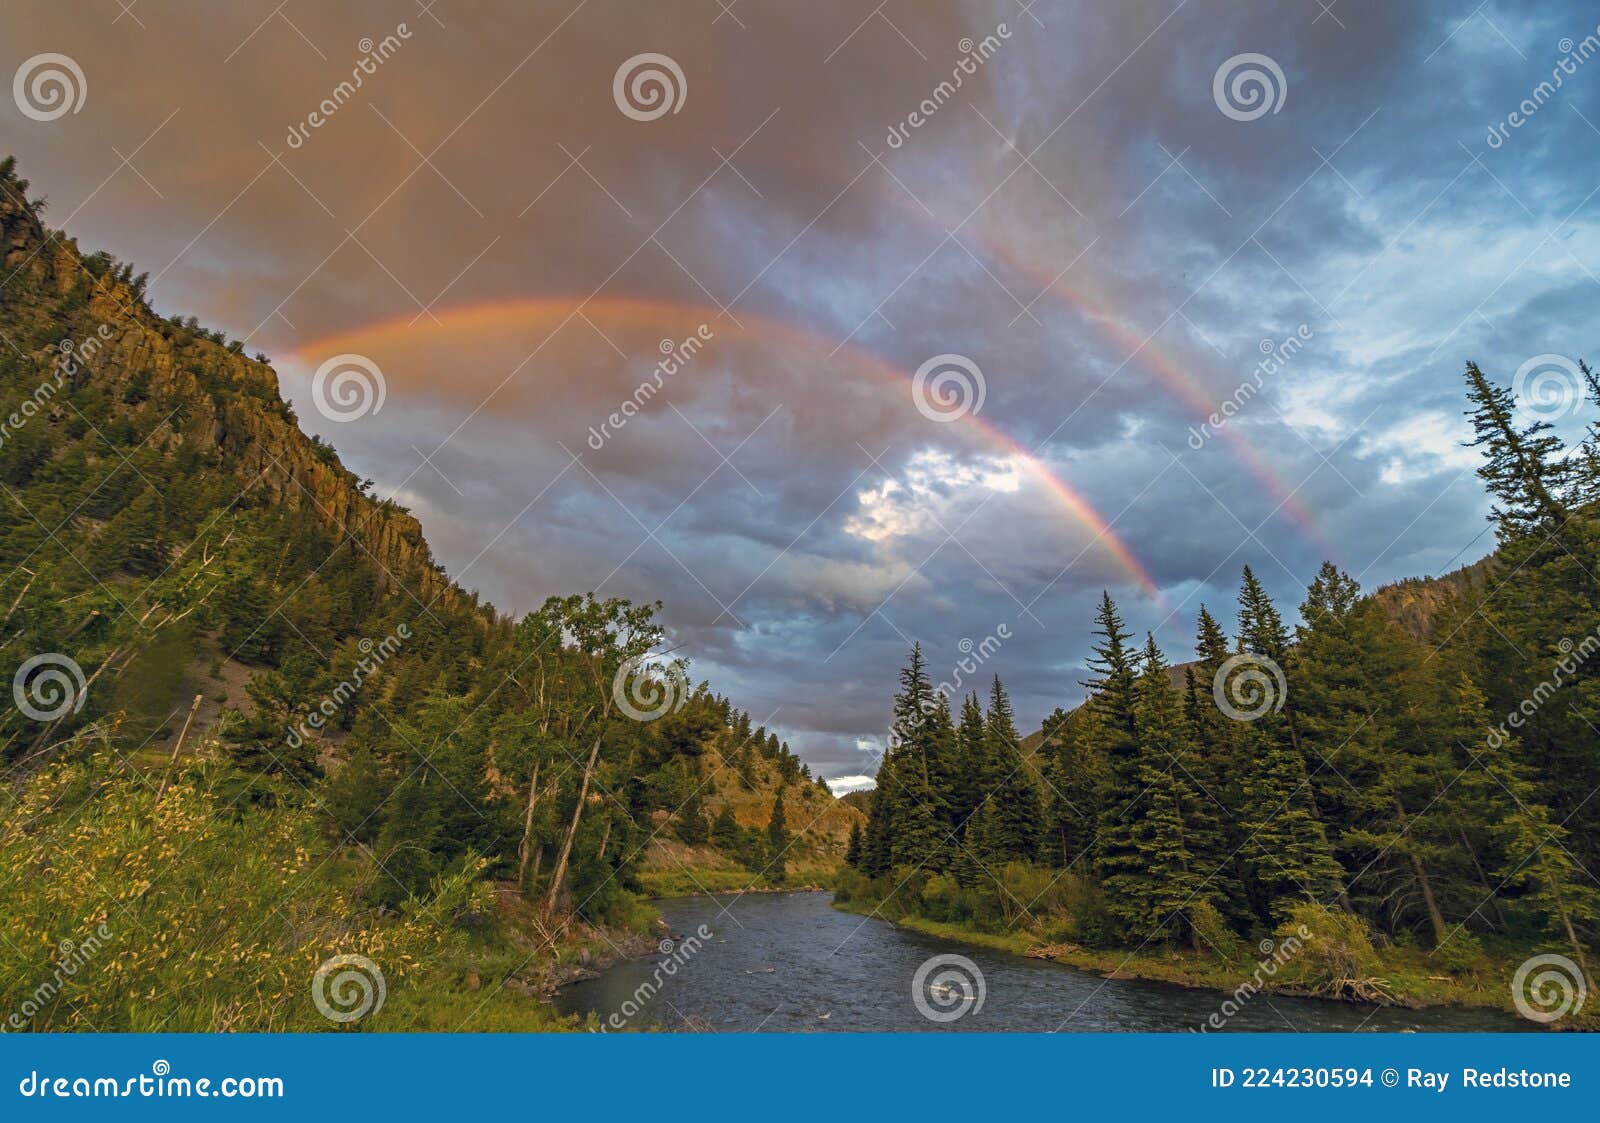 double rainbow over the rio grande river in colorado